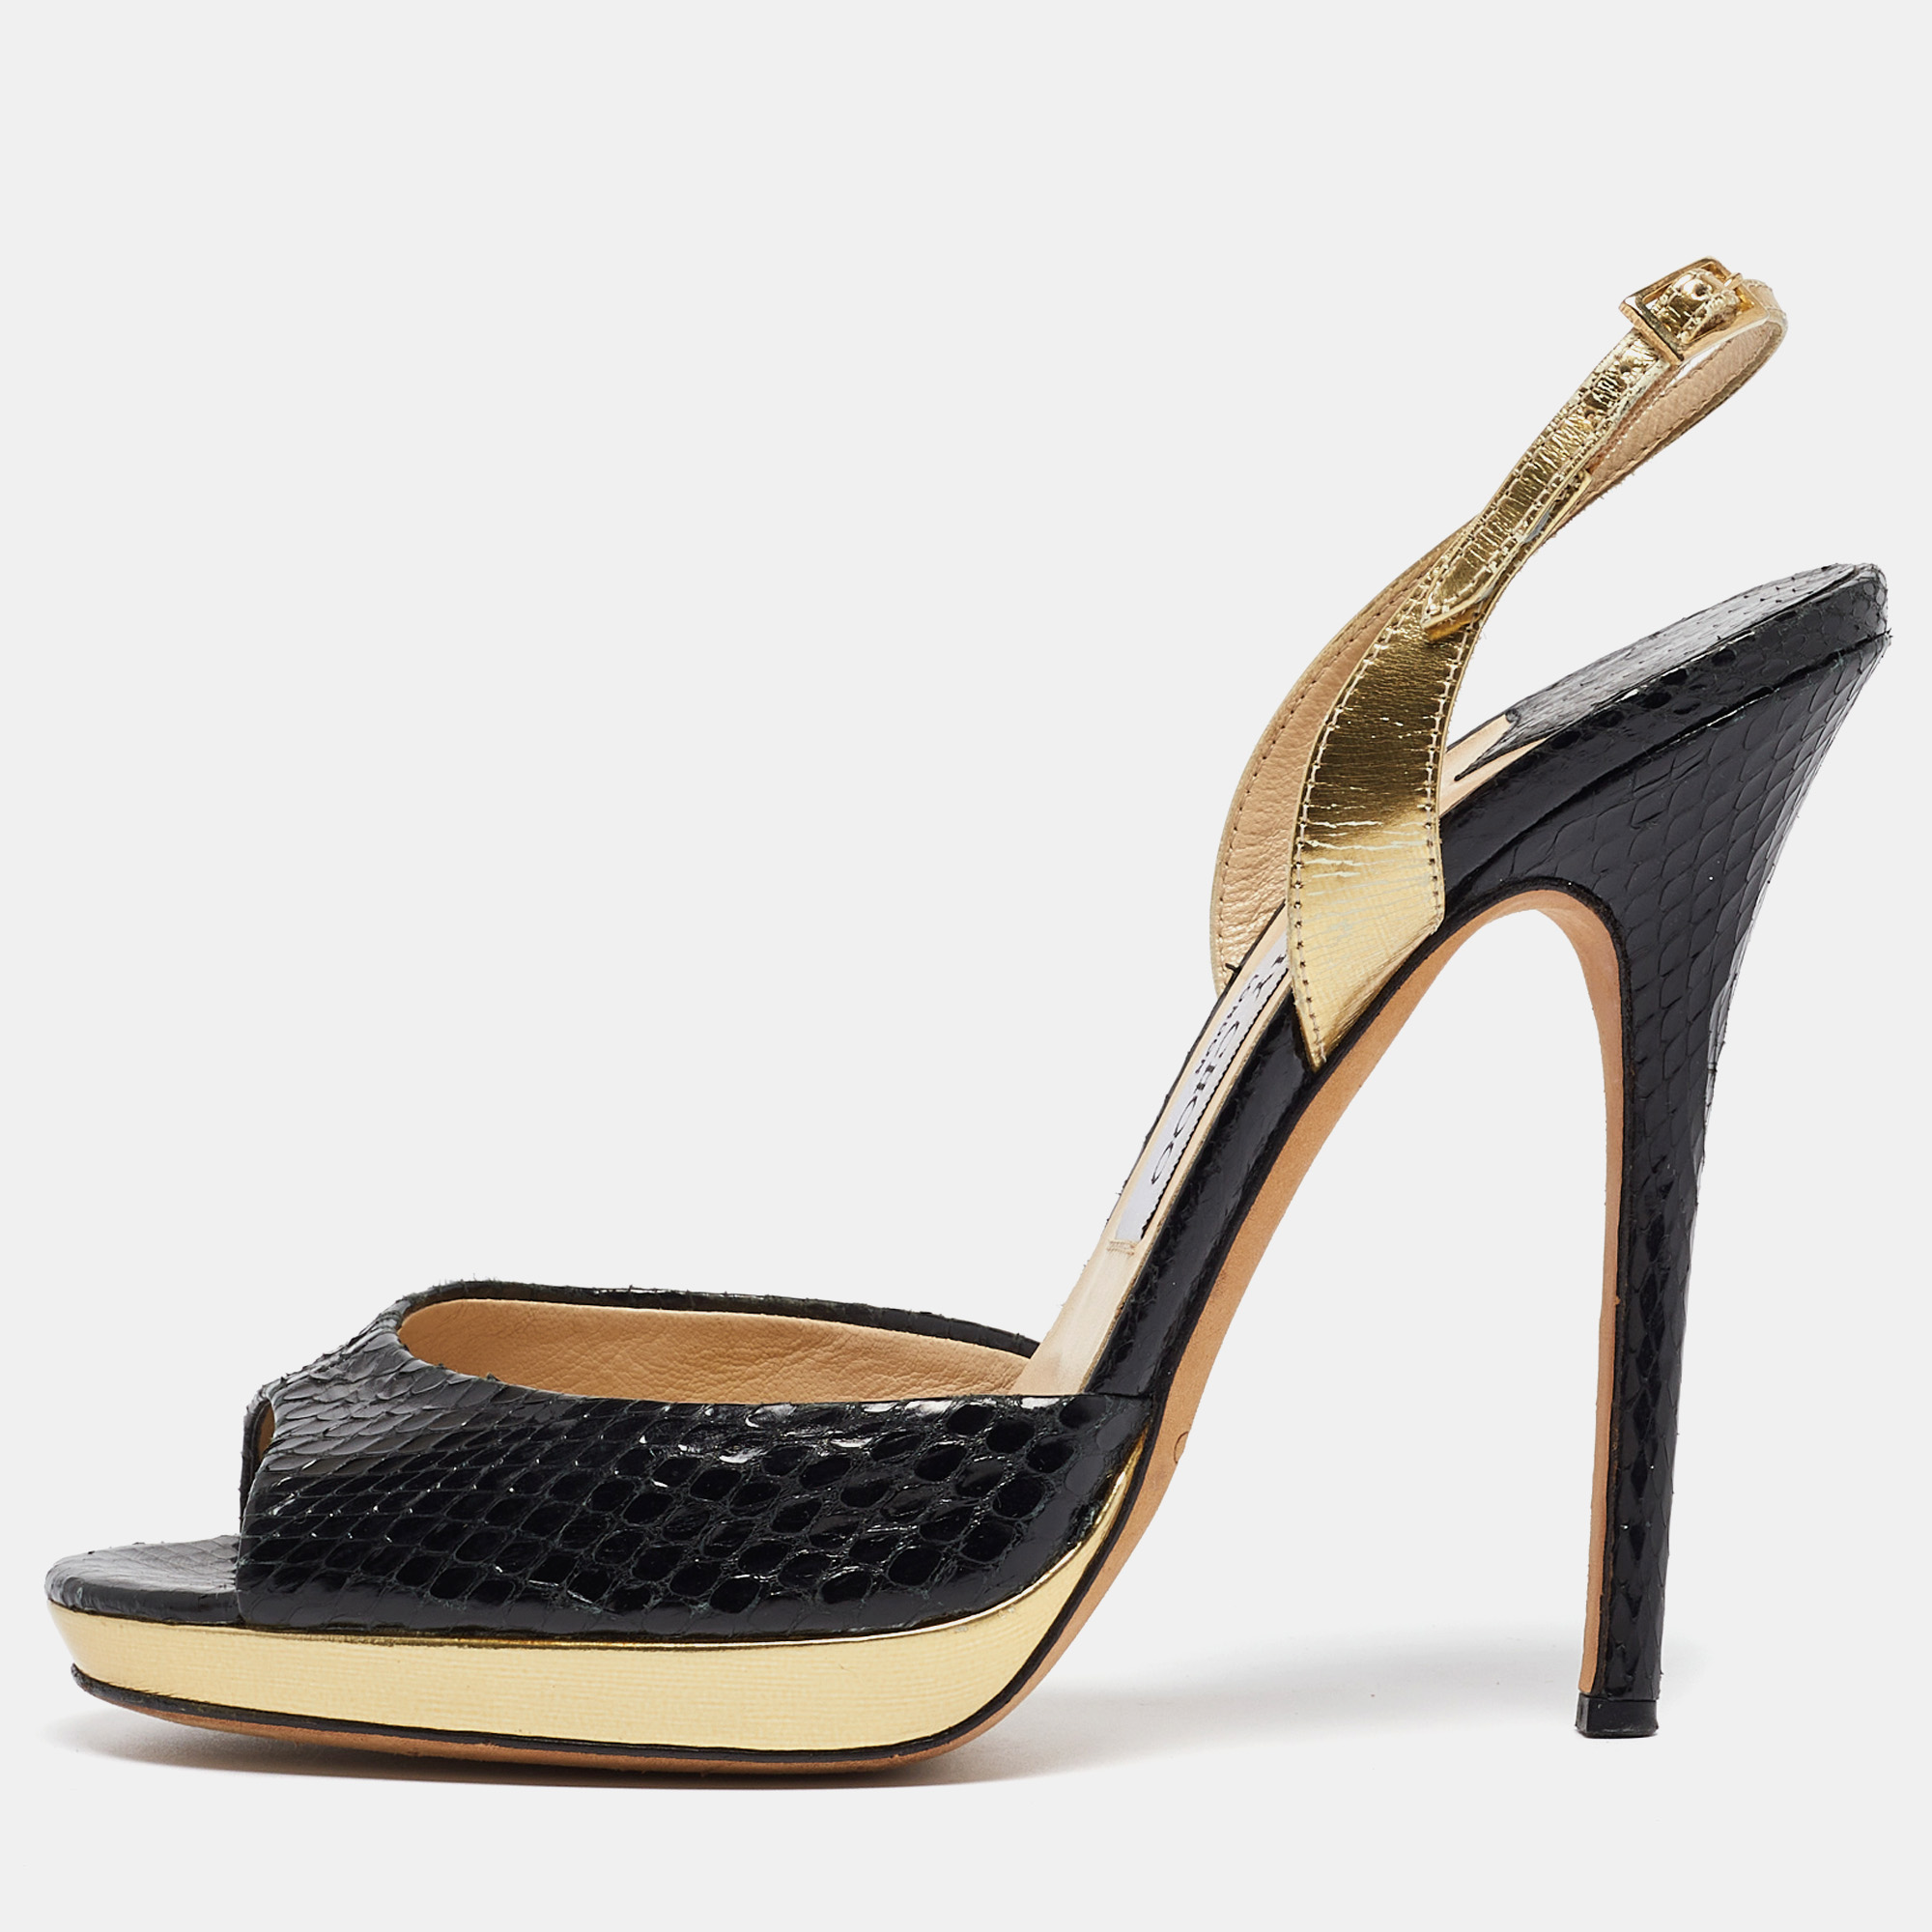 Jimmy choo black/gold python and leather platform slingback sandals size 39